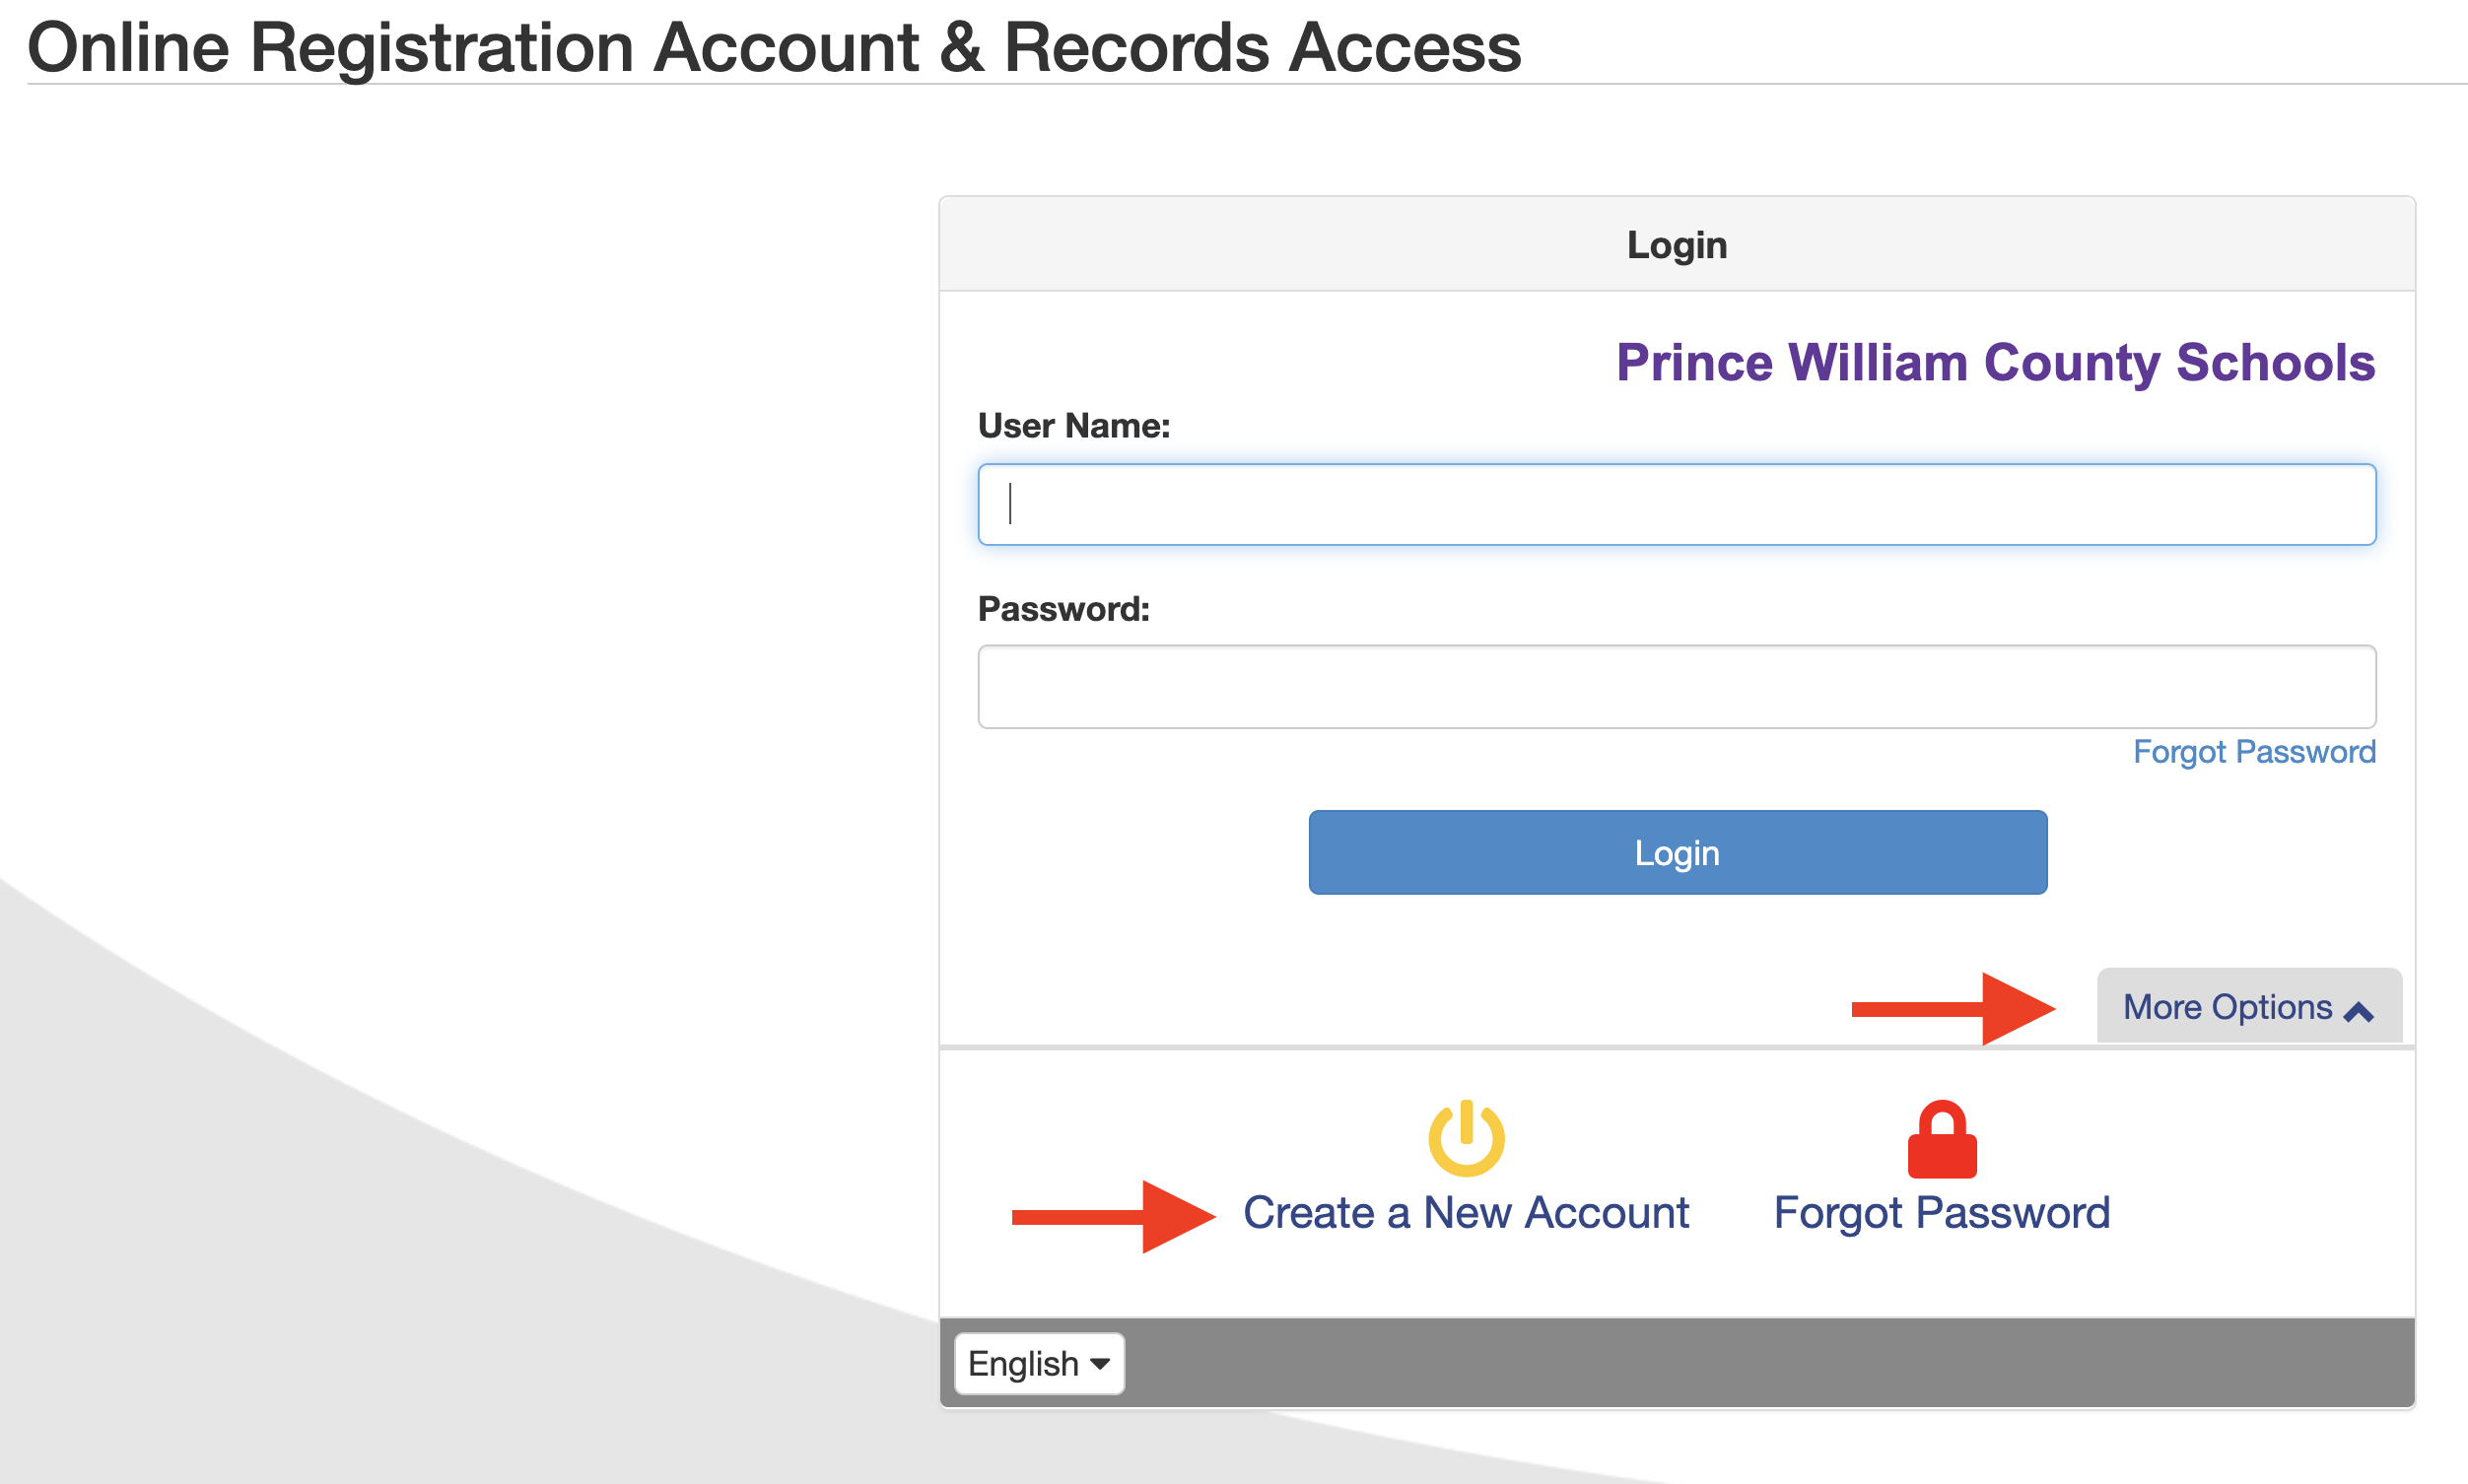 Screenshot of Online Registration Account & Records Access screen